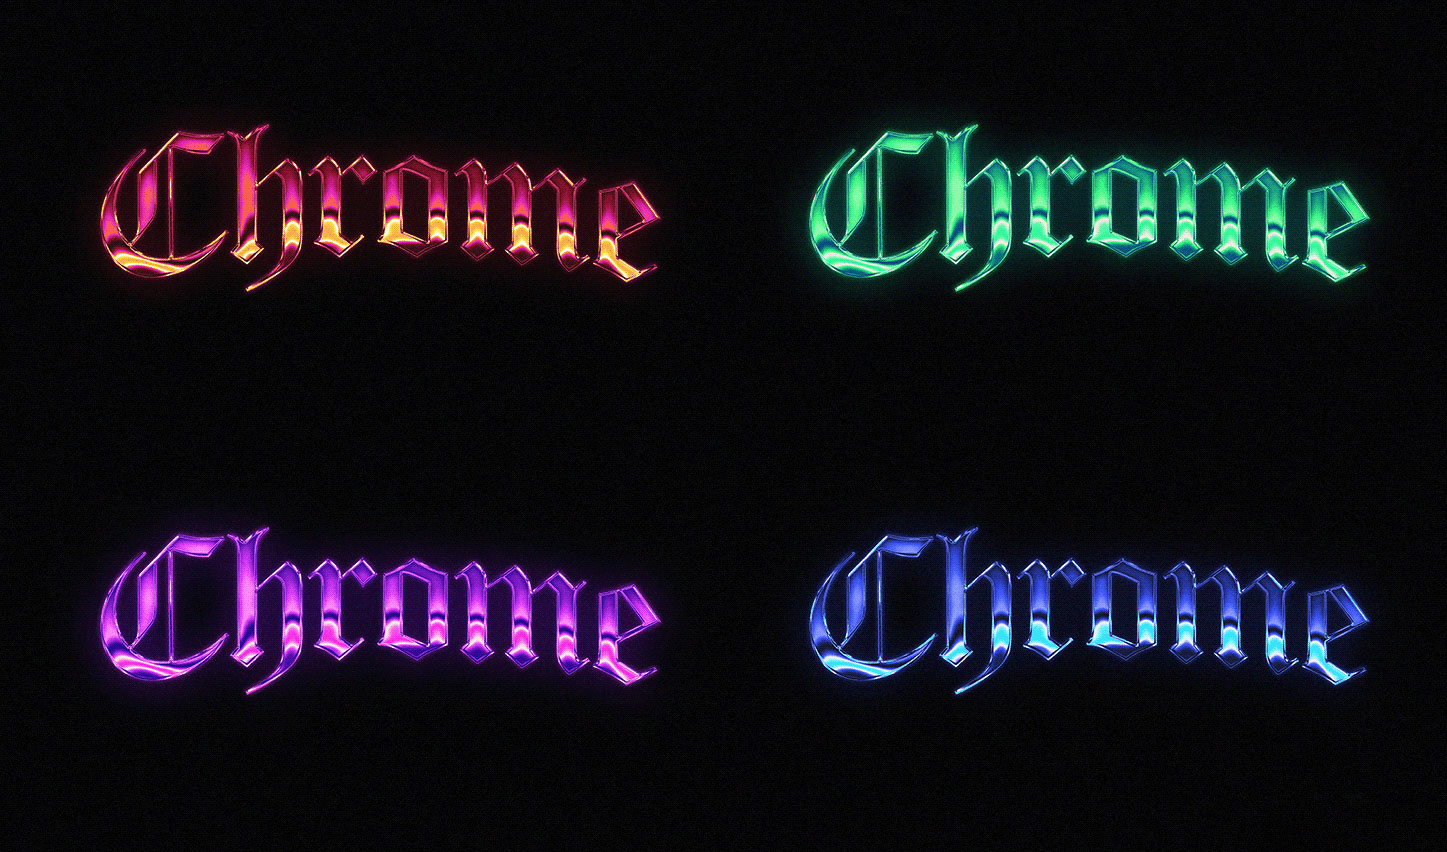 chrome gradient photoshop download